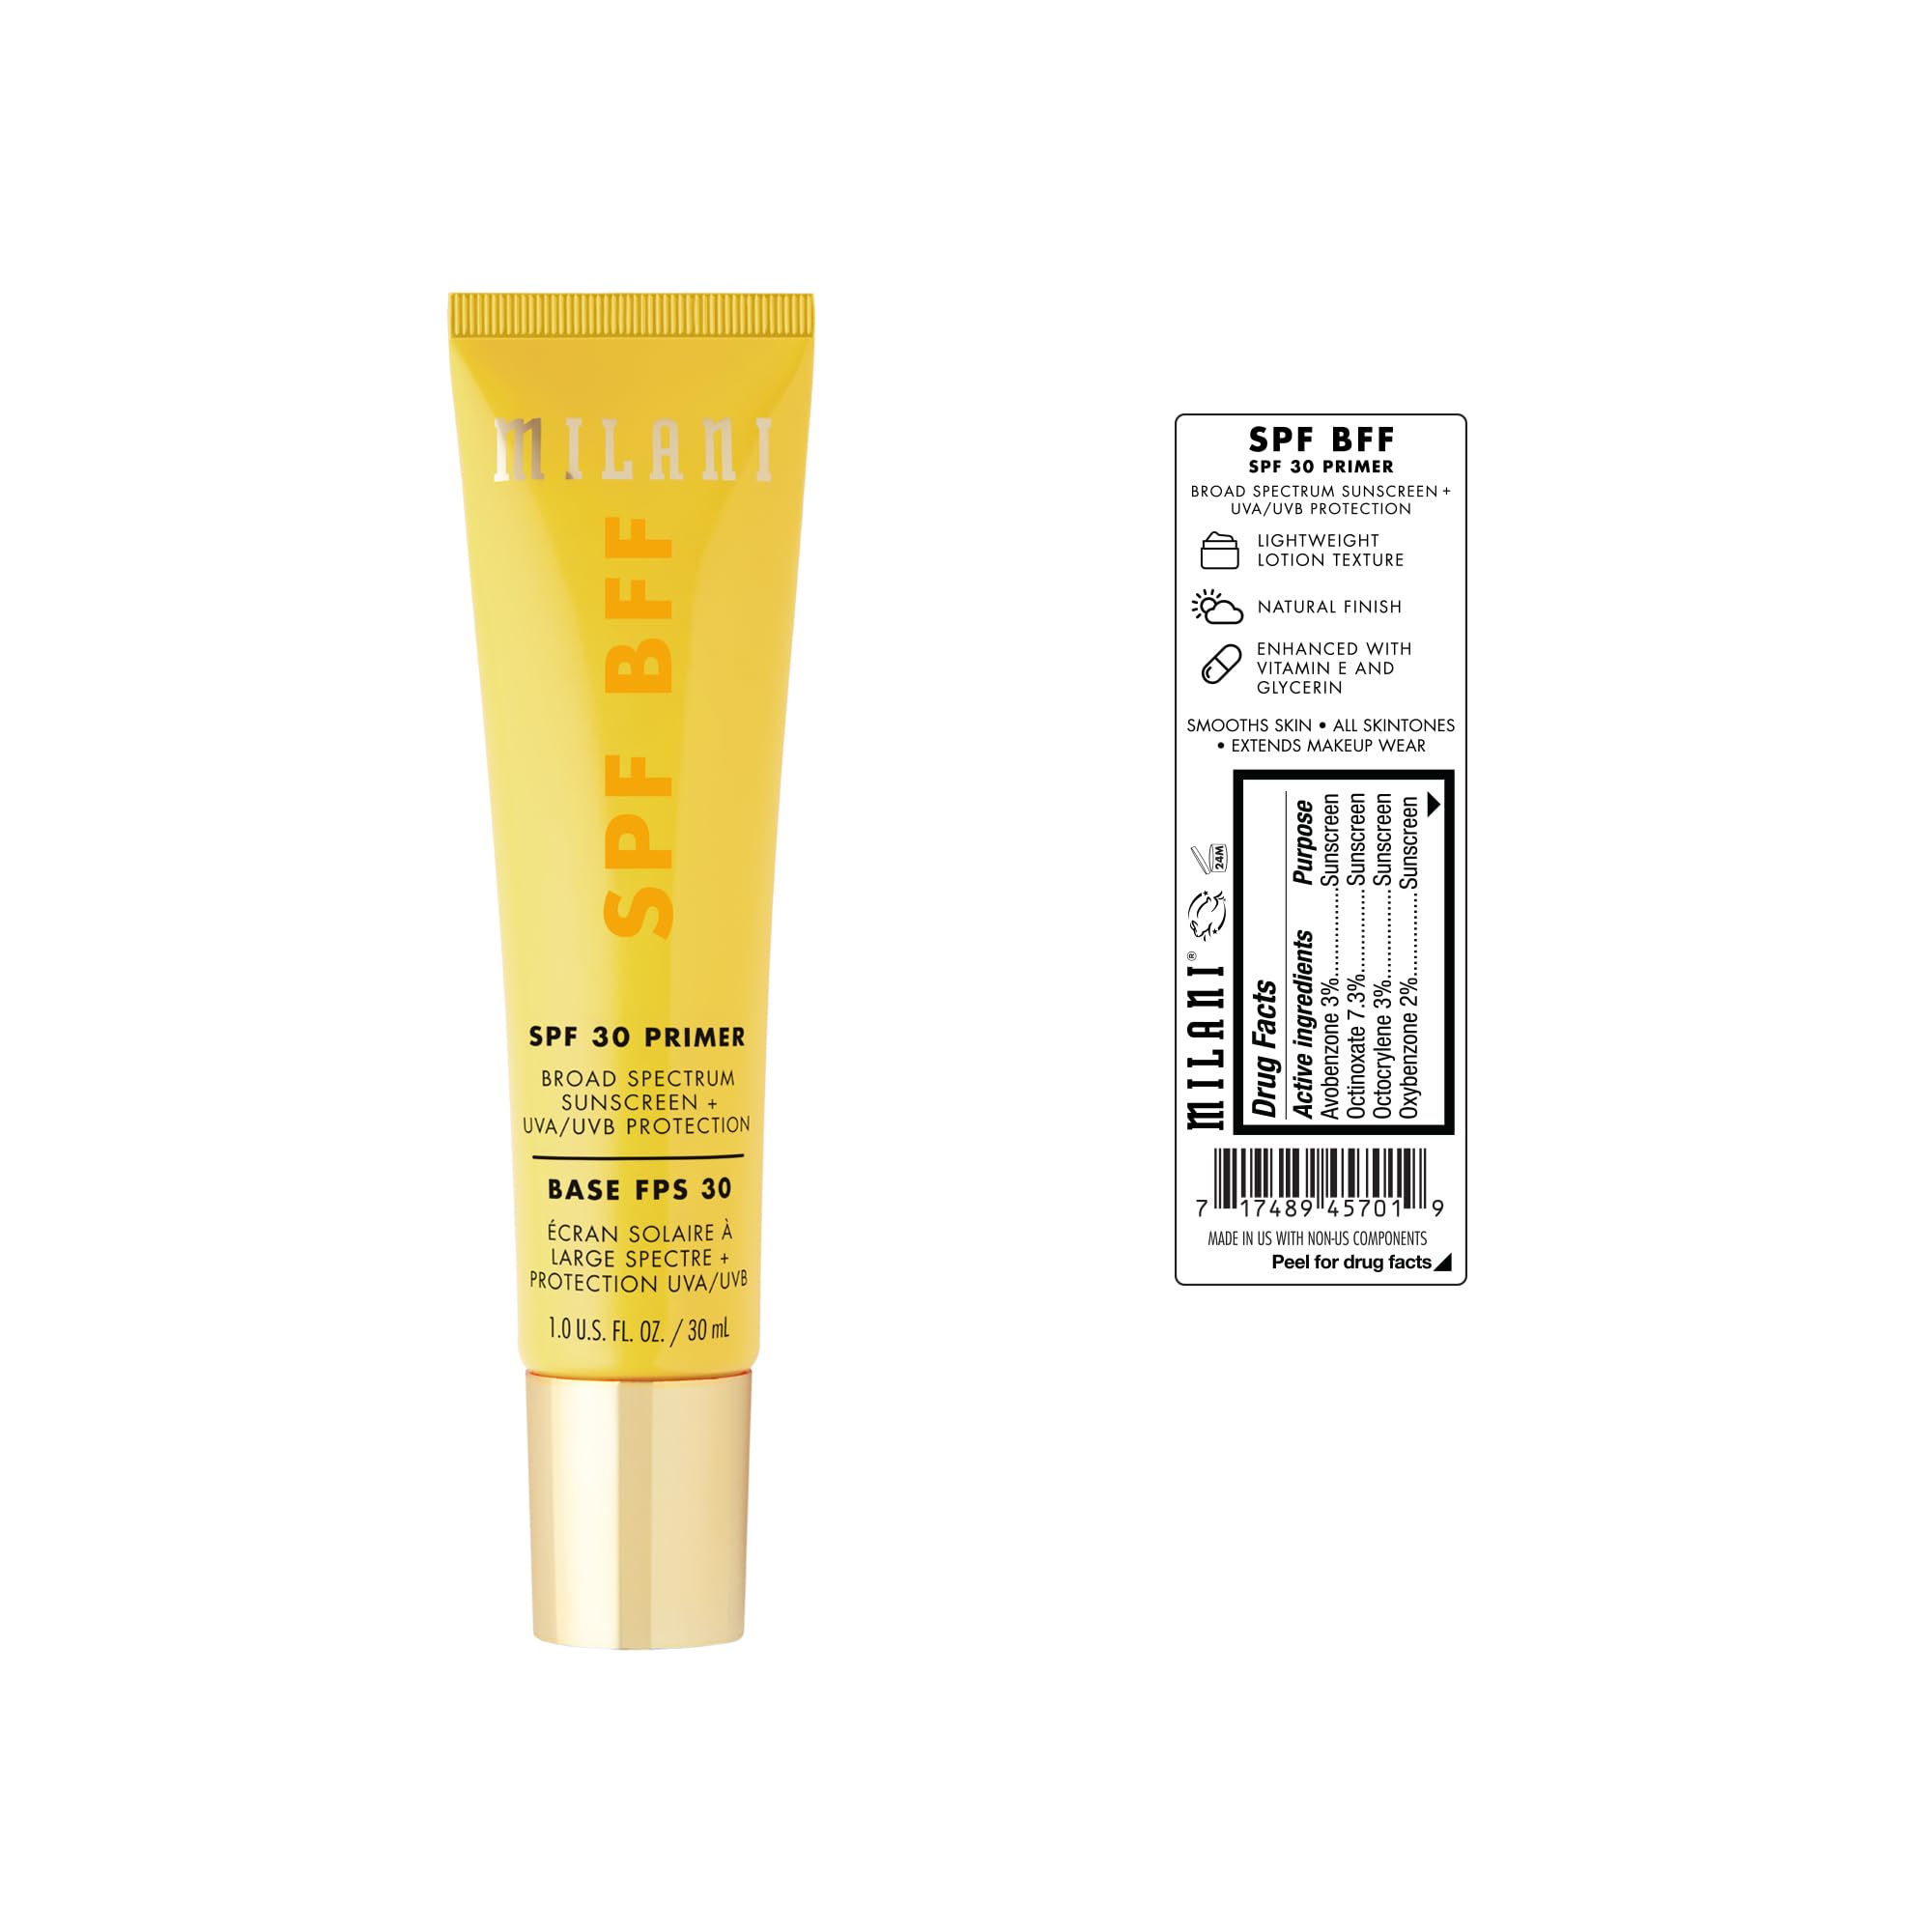 Milani SPF BFF Primer for Makeup (1.0 FlOz.)- Makeup Primer with Sunscreen SPF30